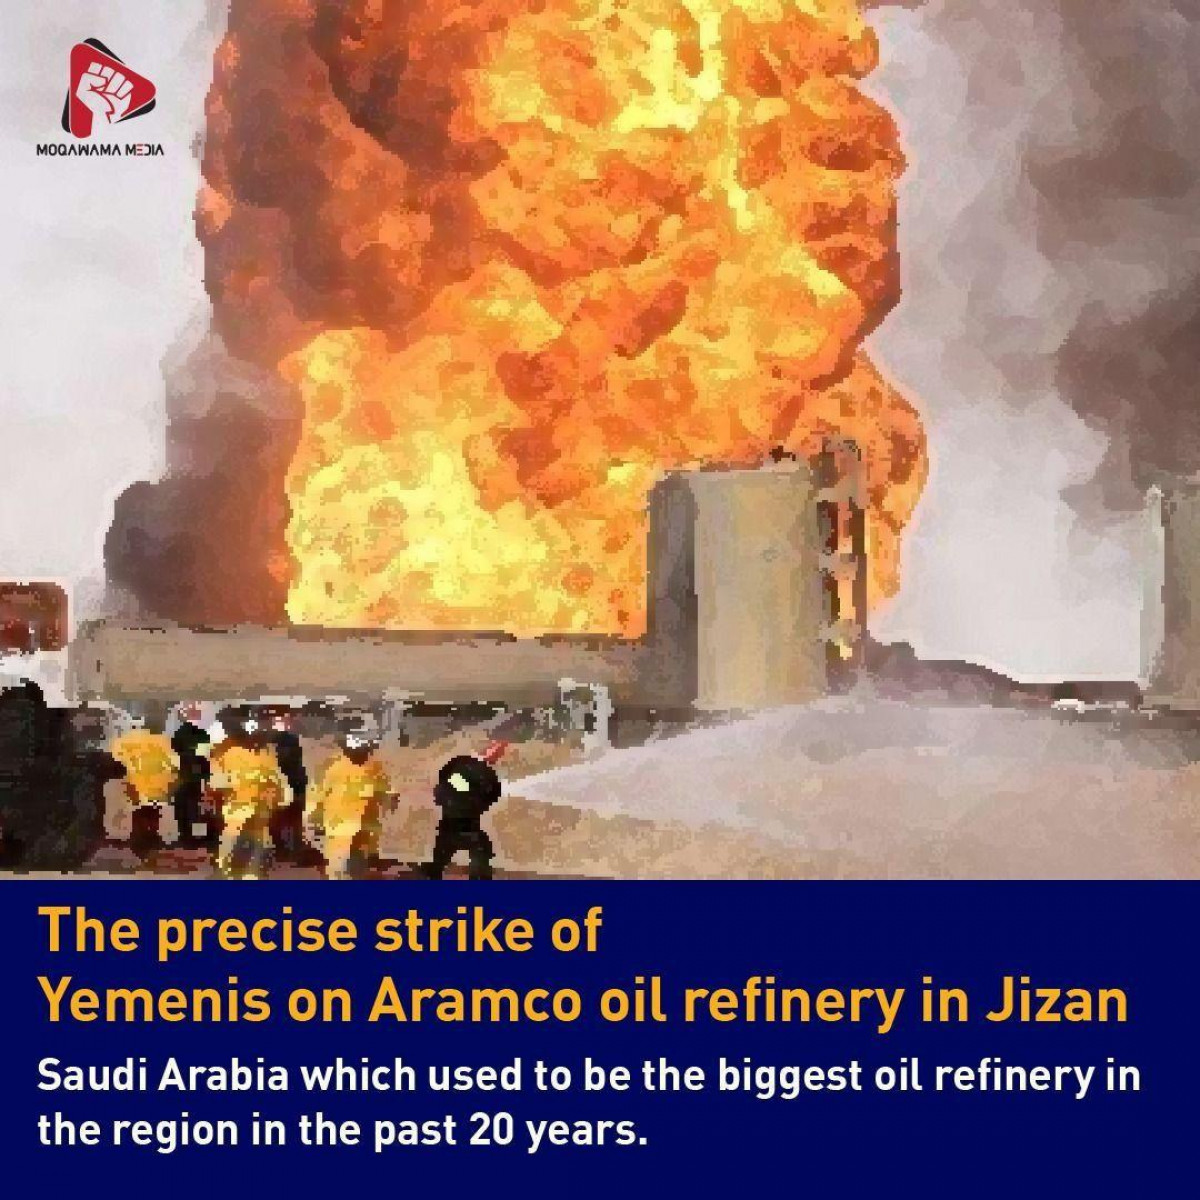 The precise strike of Yemenis on Aramco oil refinery in Jizan